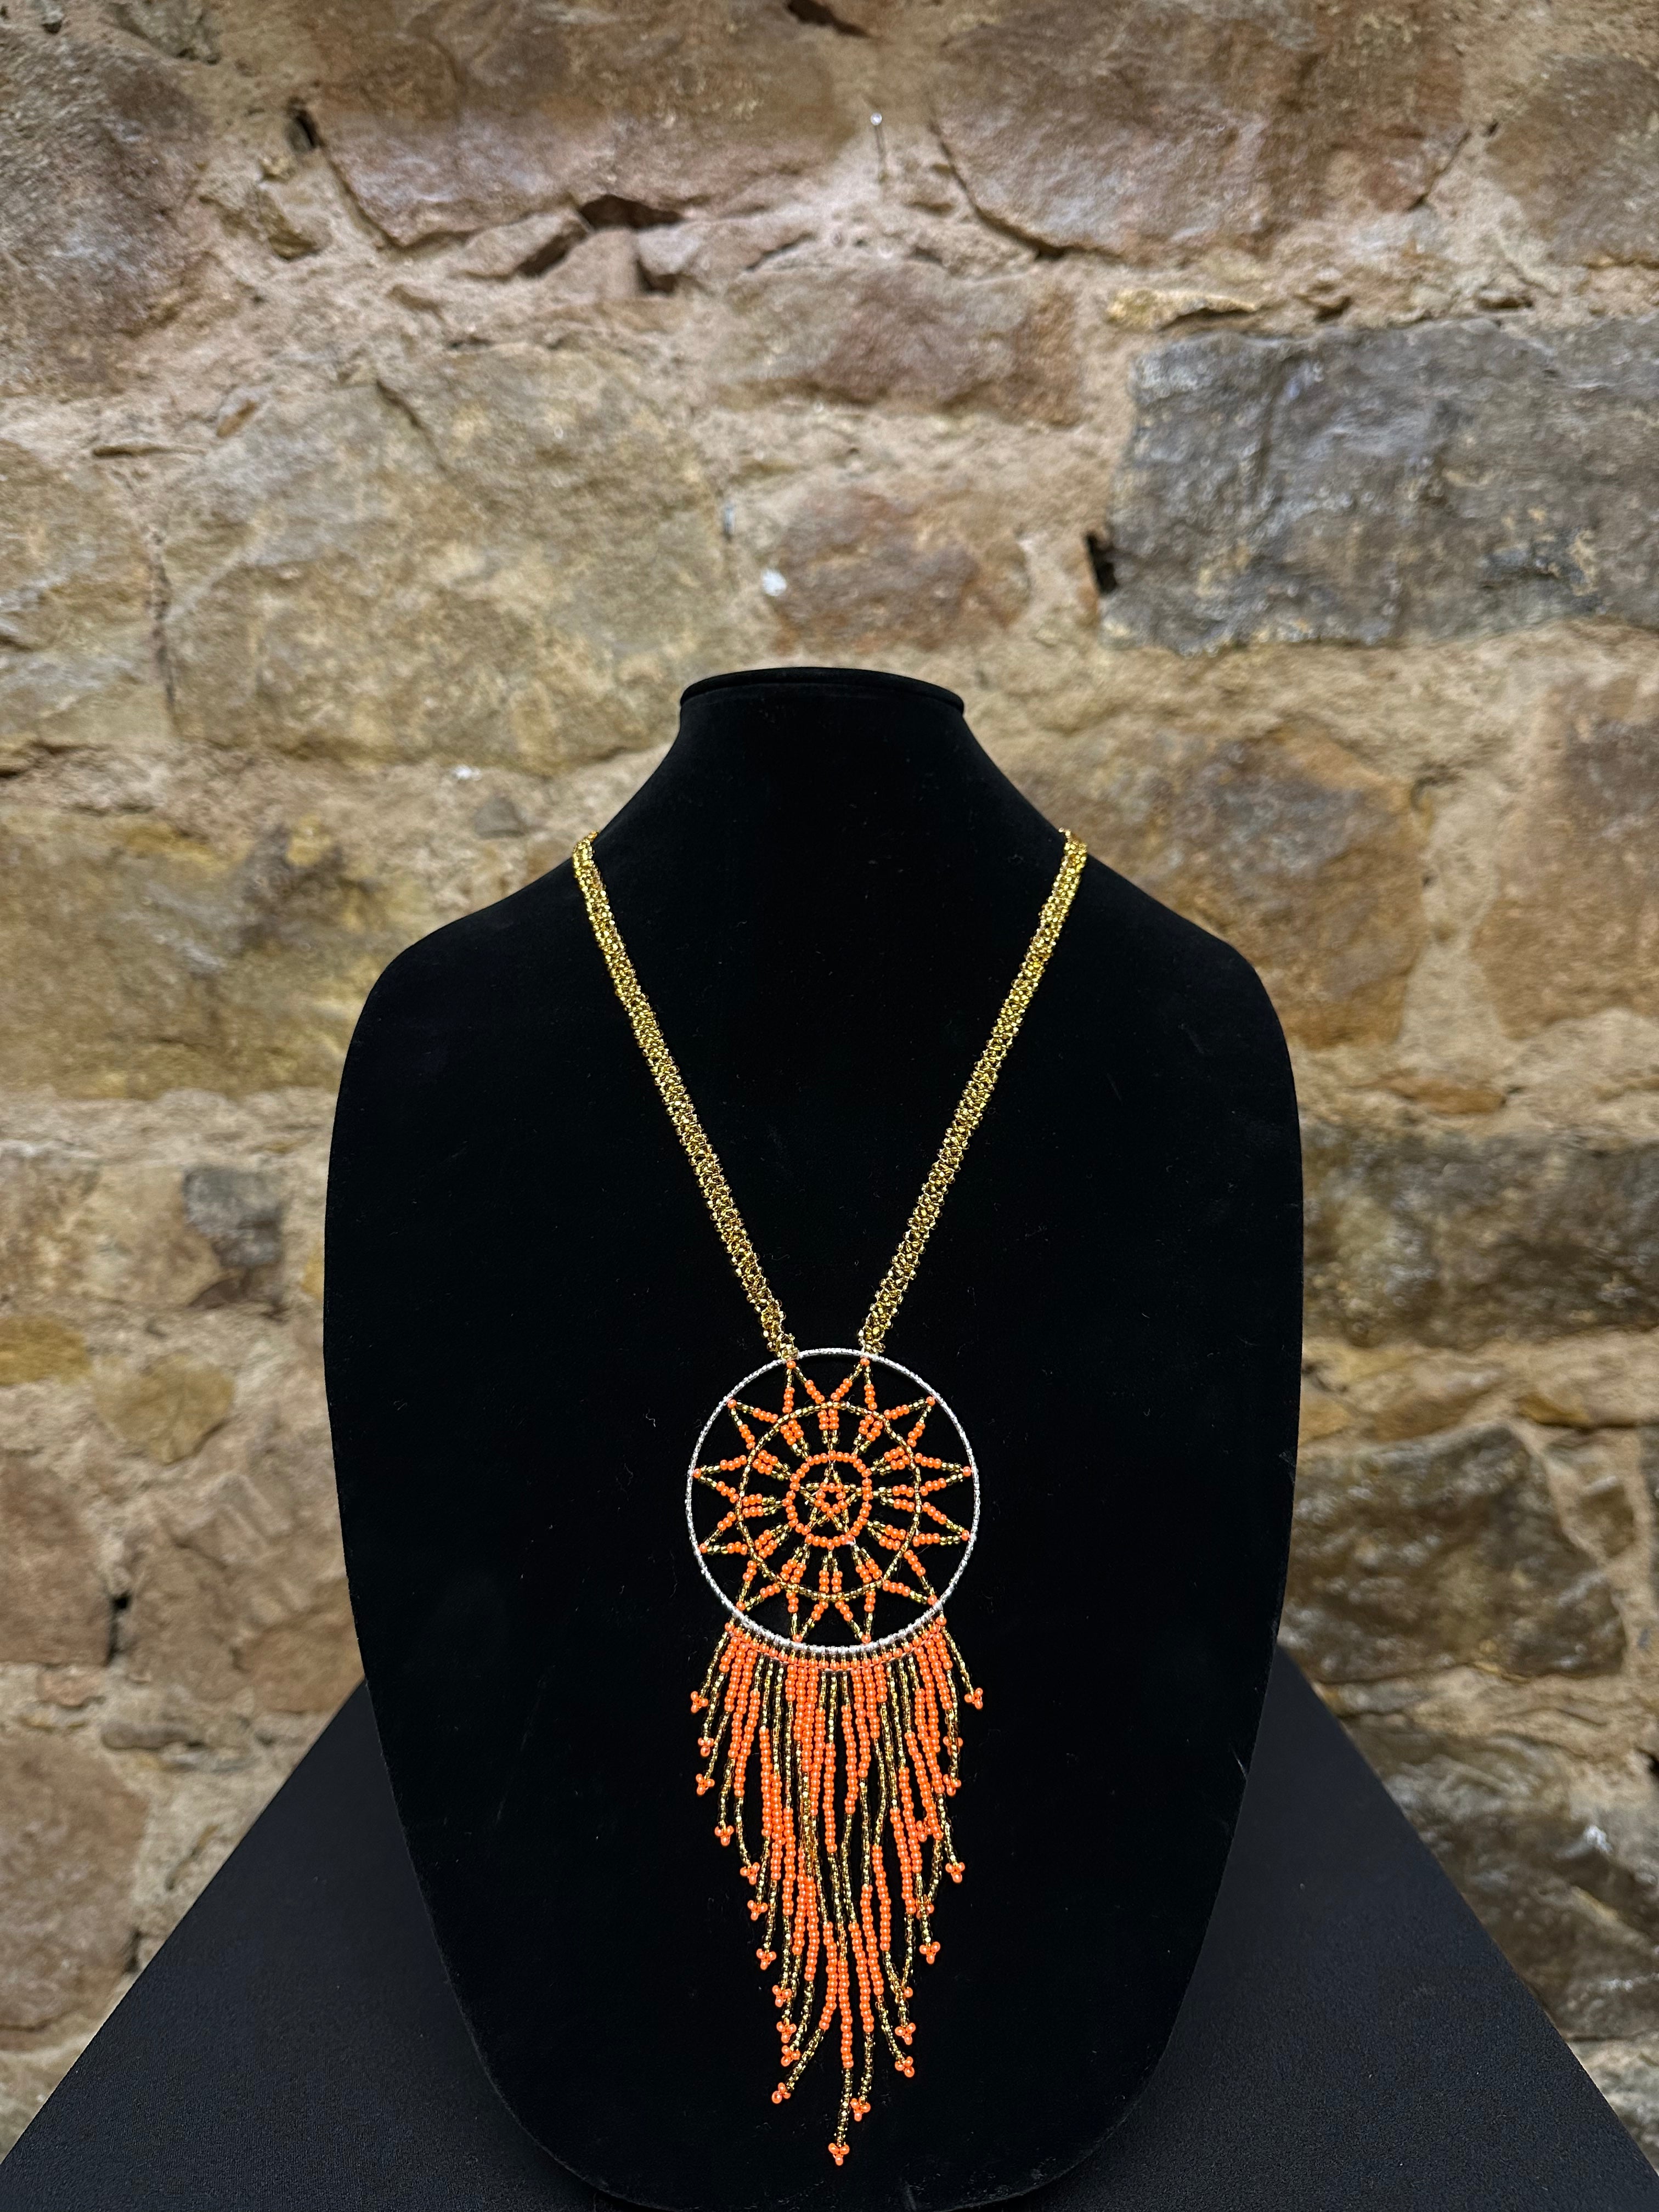 Golden dream catcher necklace | JewelryAndGems.eu